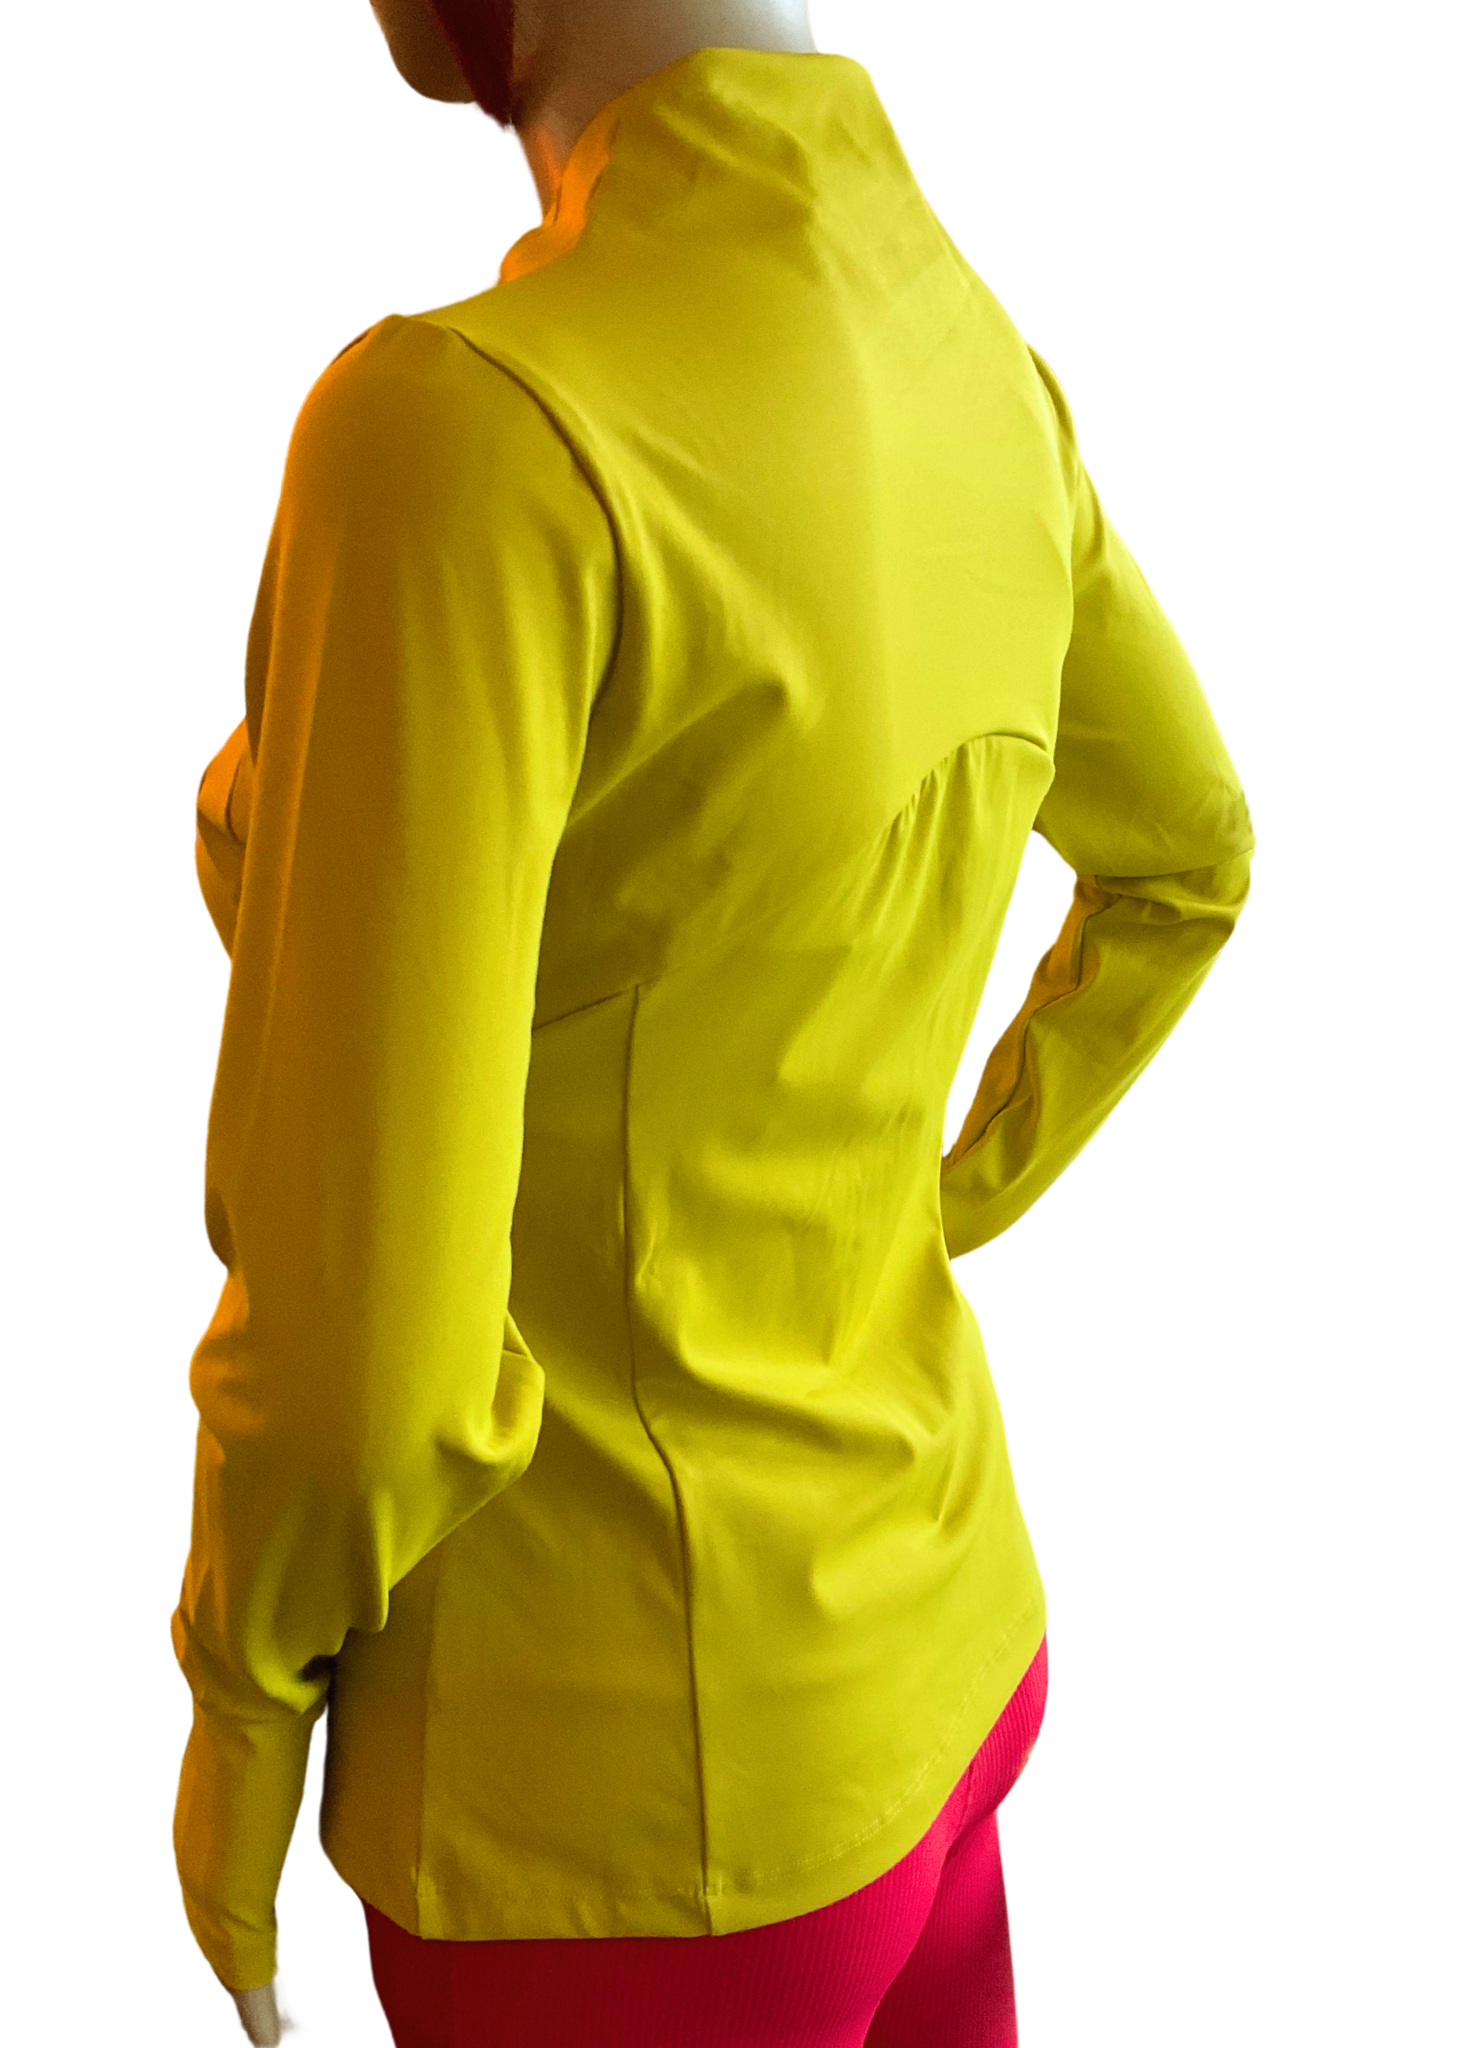 Ladies Sportswear: Yoga Jacket Yellow